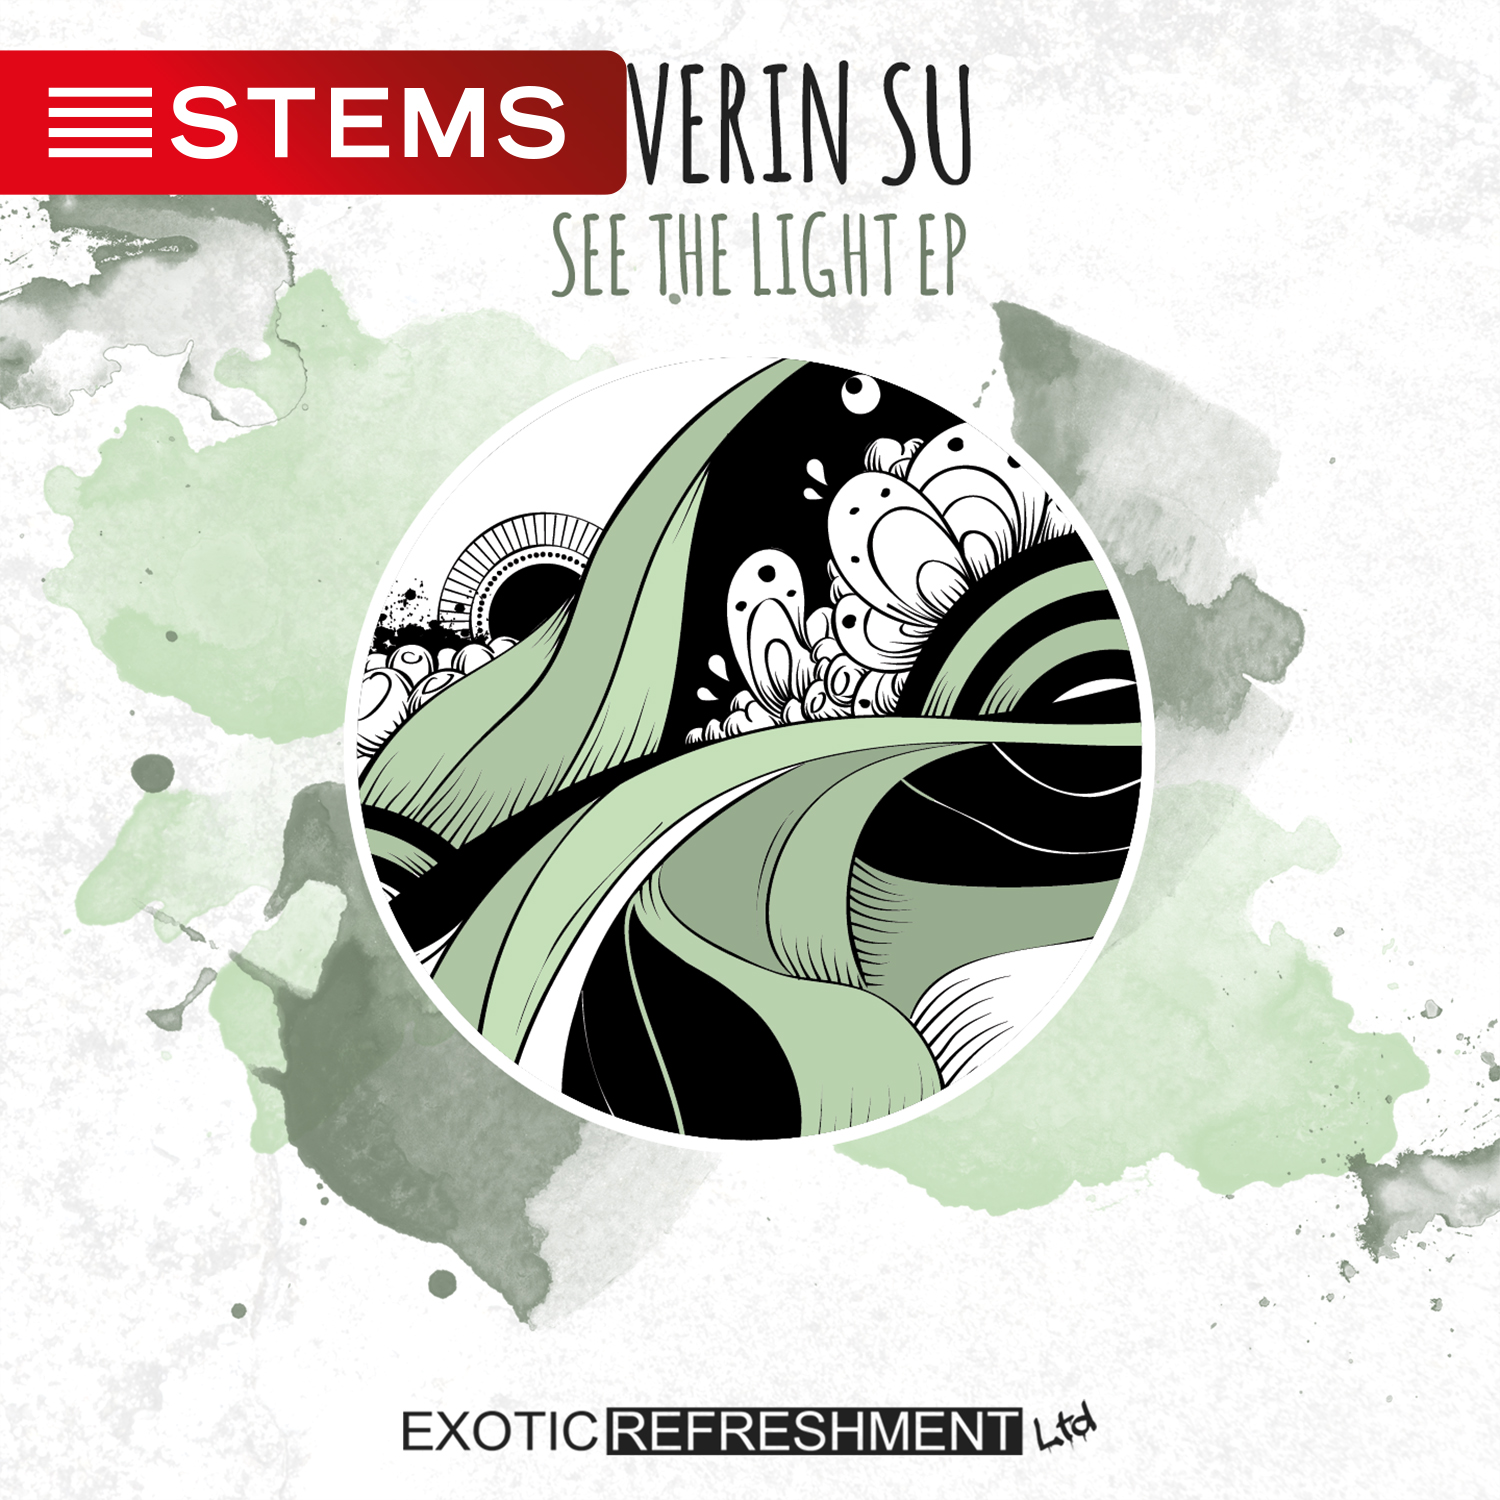 Severin Su  - See The Light EP